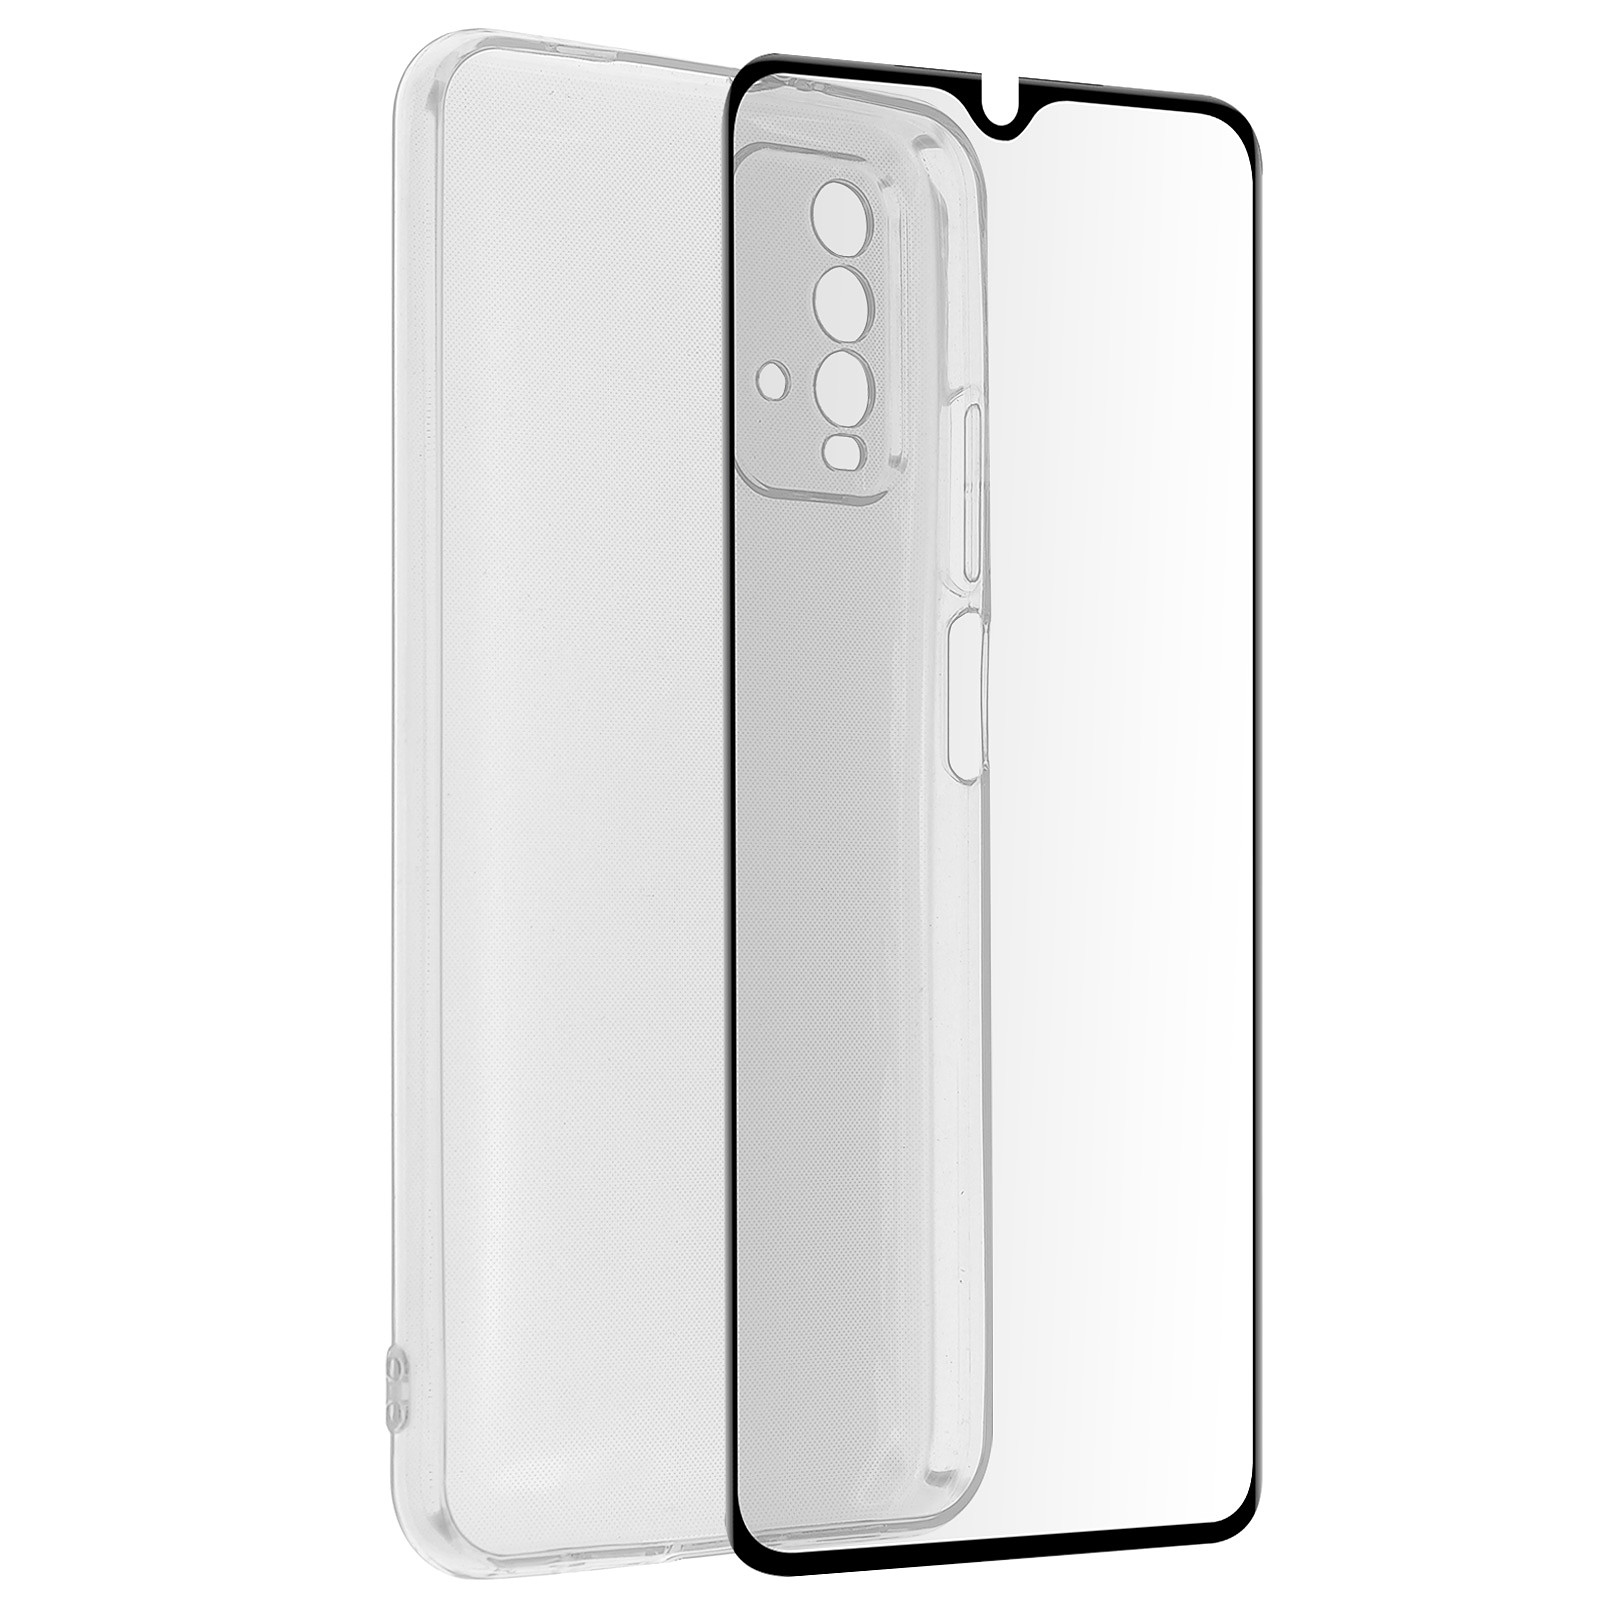 Avizar Coque pour Xiaomi Redmi 9T Souple et Film Verre Trempe Durete 9H Transparent Noir - Coque telephone Avizar